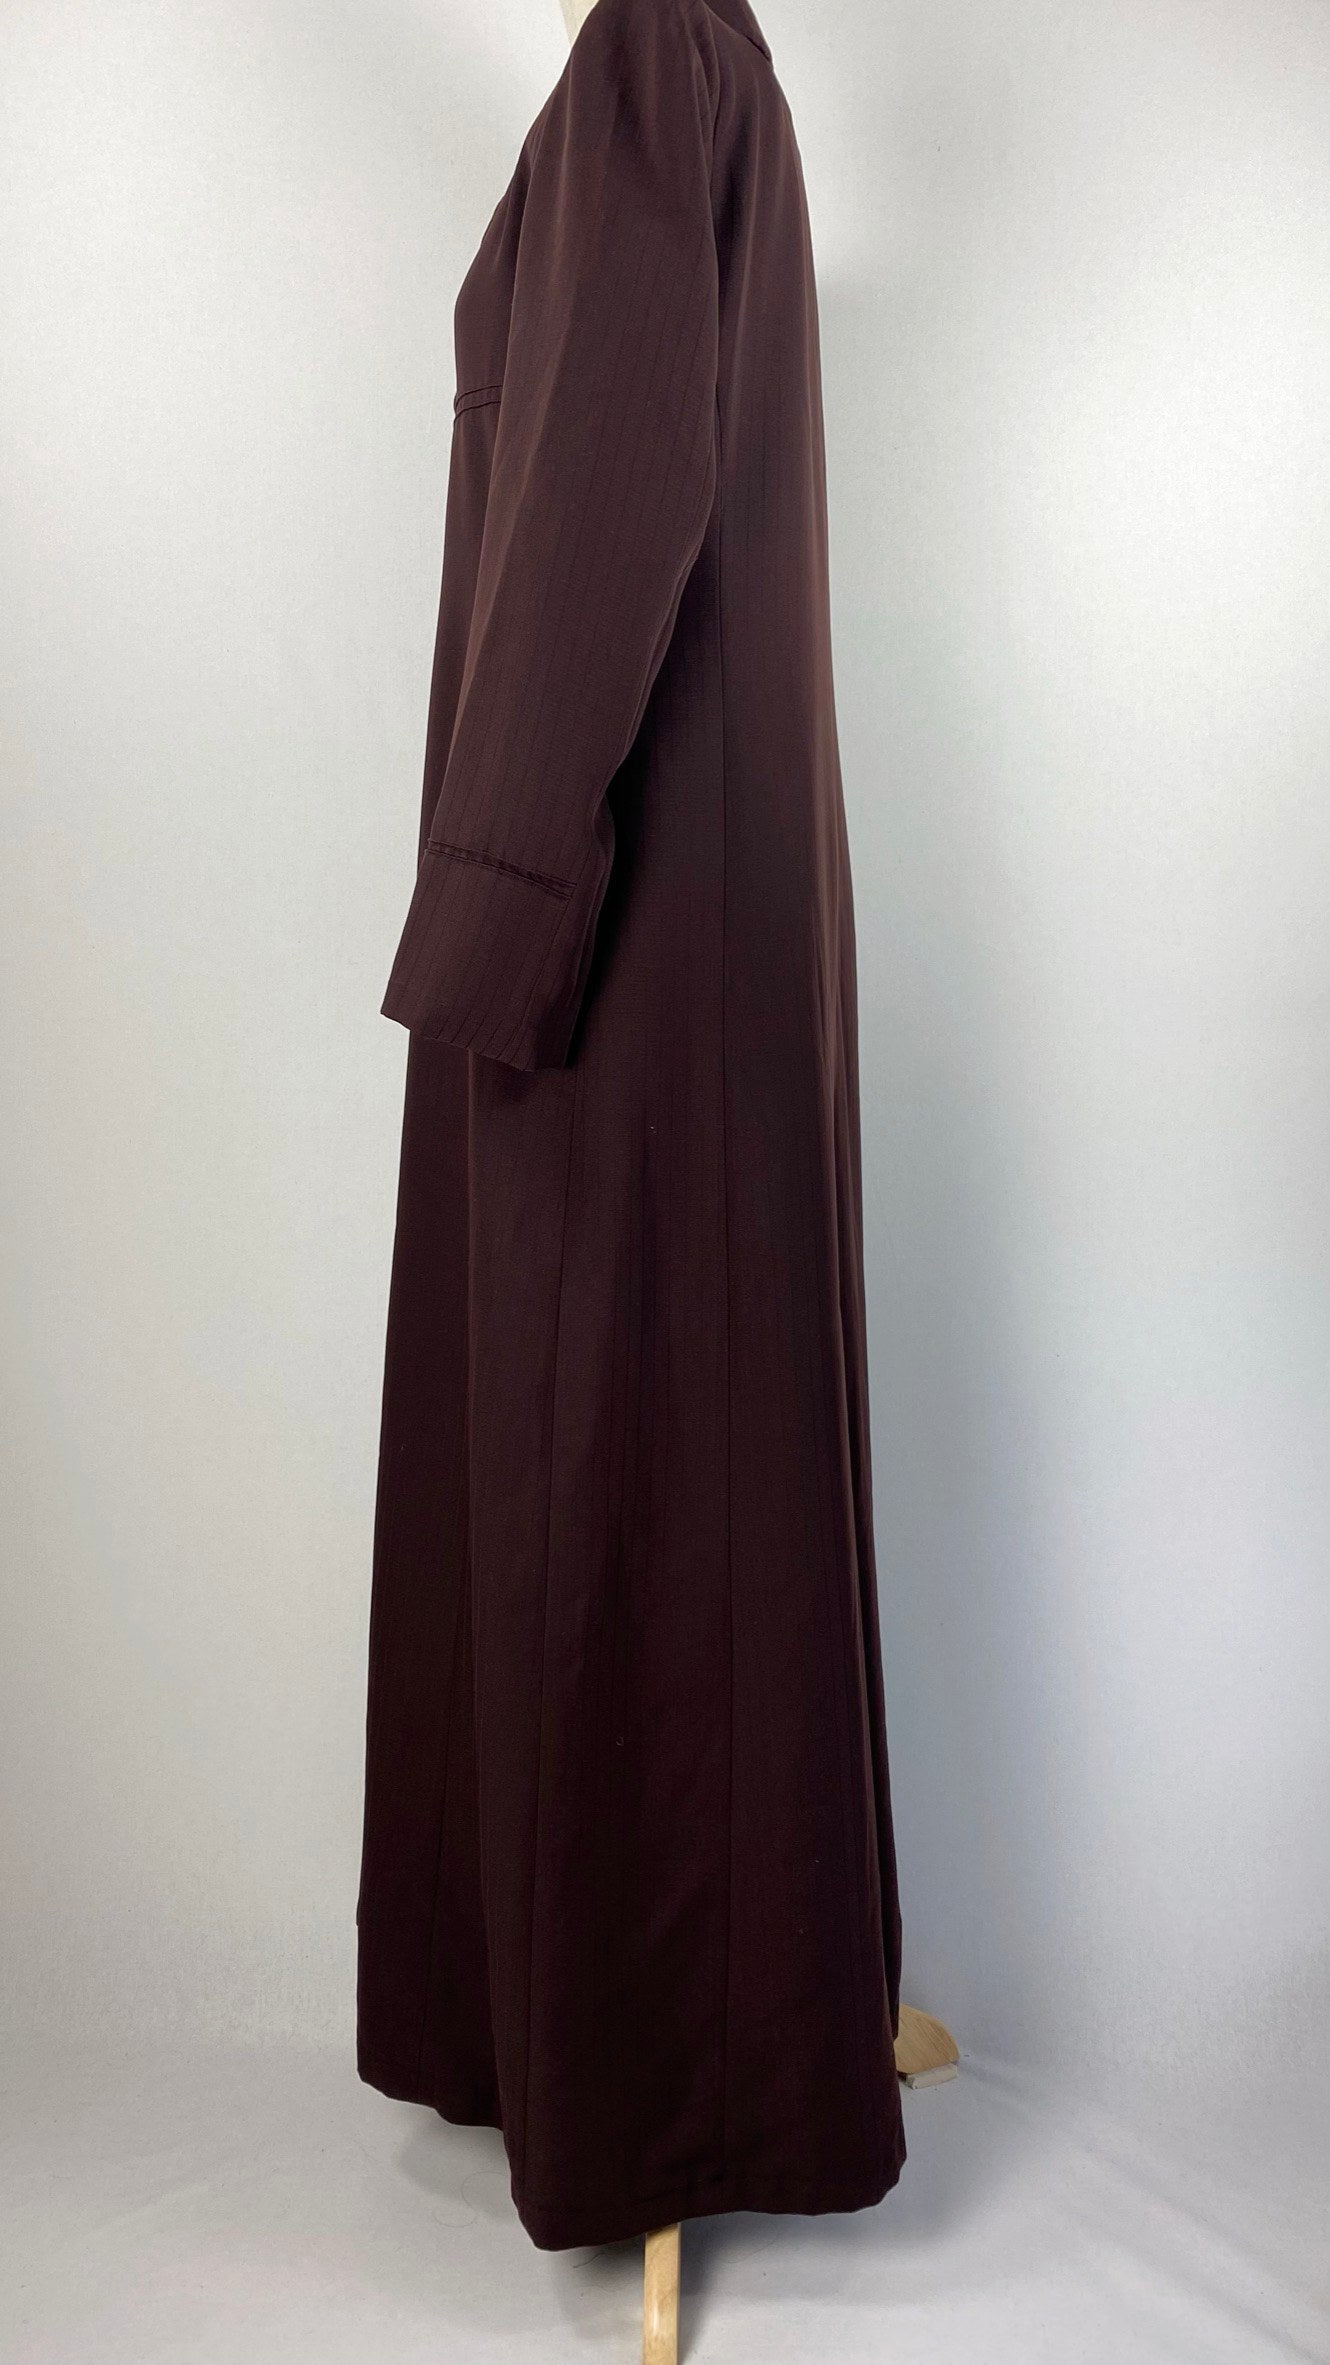 Long Sleeve Button Up Abaya+ Jilbab, Purple